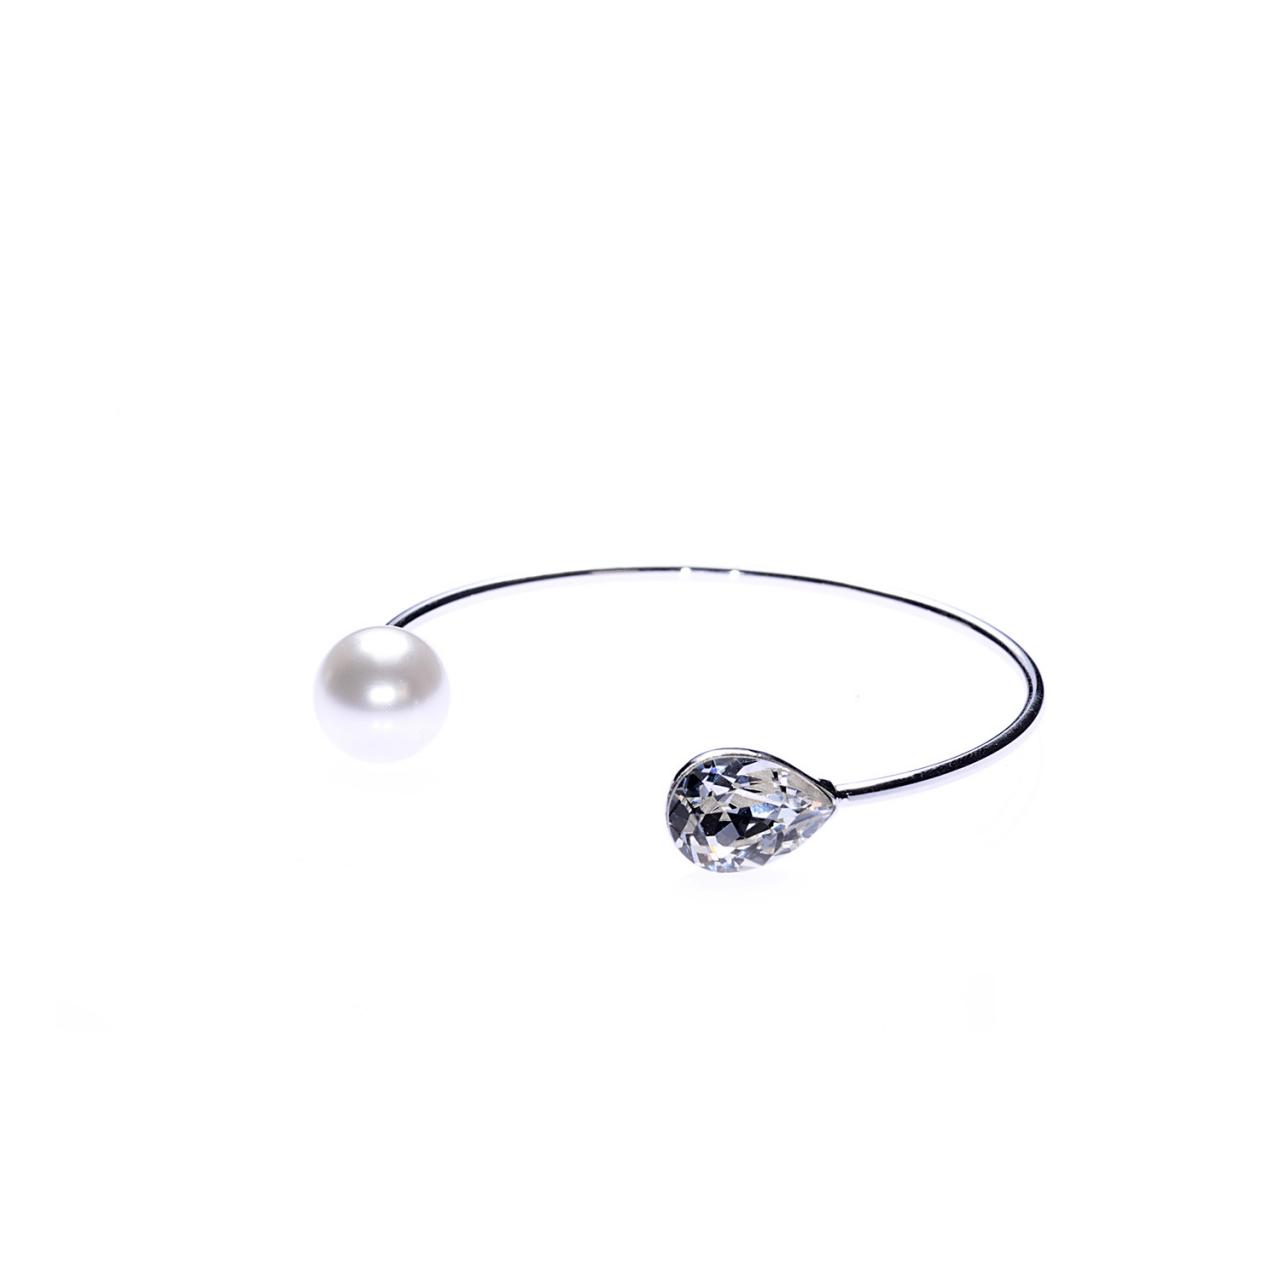 Dainty Bracelet / Pearl Bracelet / Crystal Bracelet / Silver Cuff / Thin Cuff Bracelet / Thin Silver Cuff / Silver Bangle / Chic Jewelry